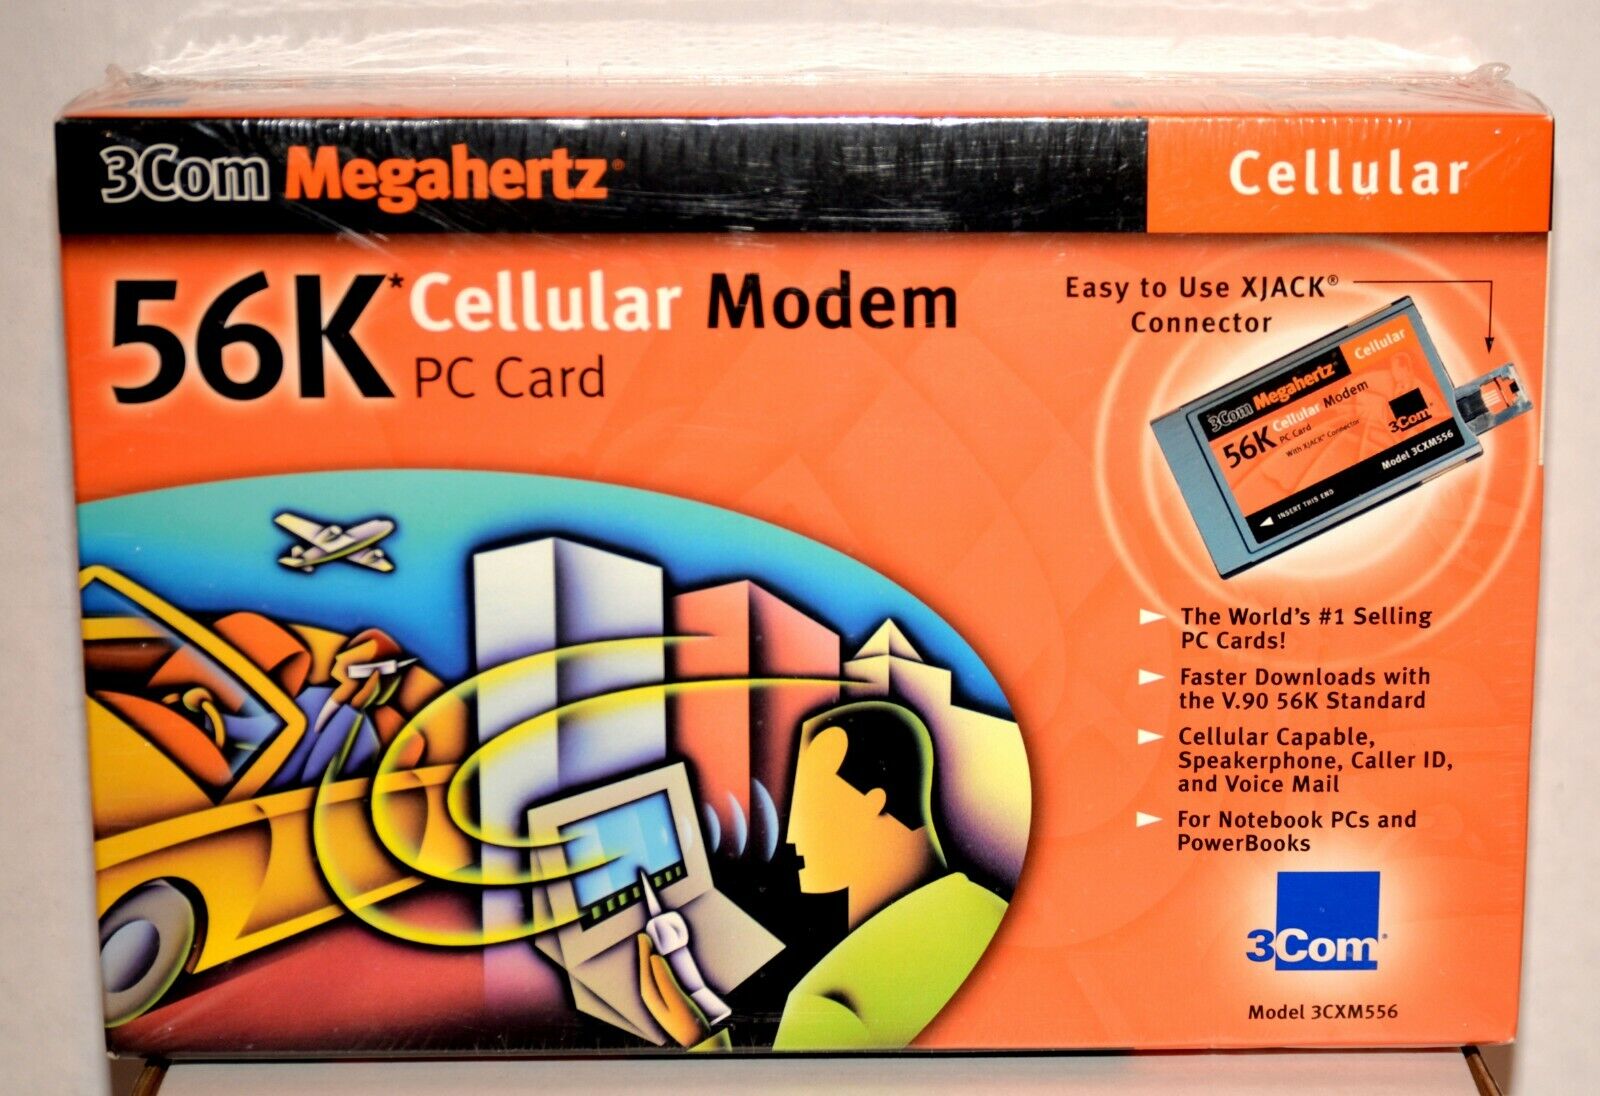 3COM Megahertz 56k Cellular Modem PC Card – Model #3CXM556 – New/Sealed